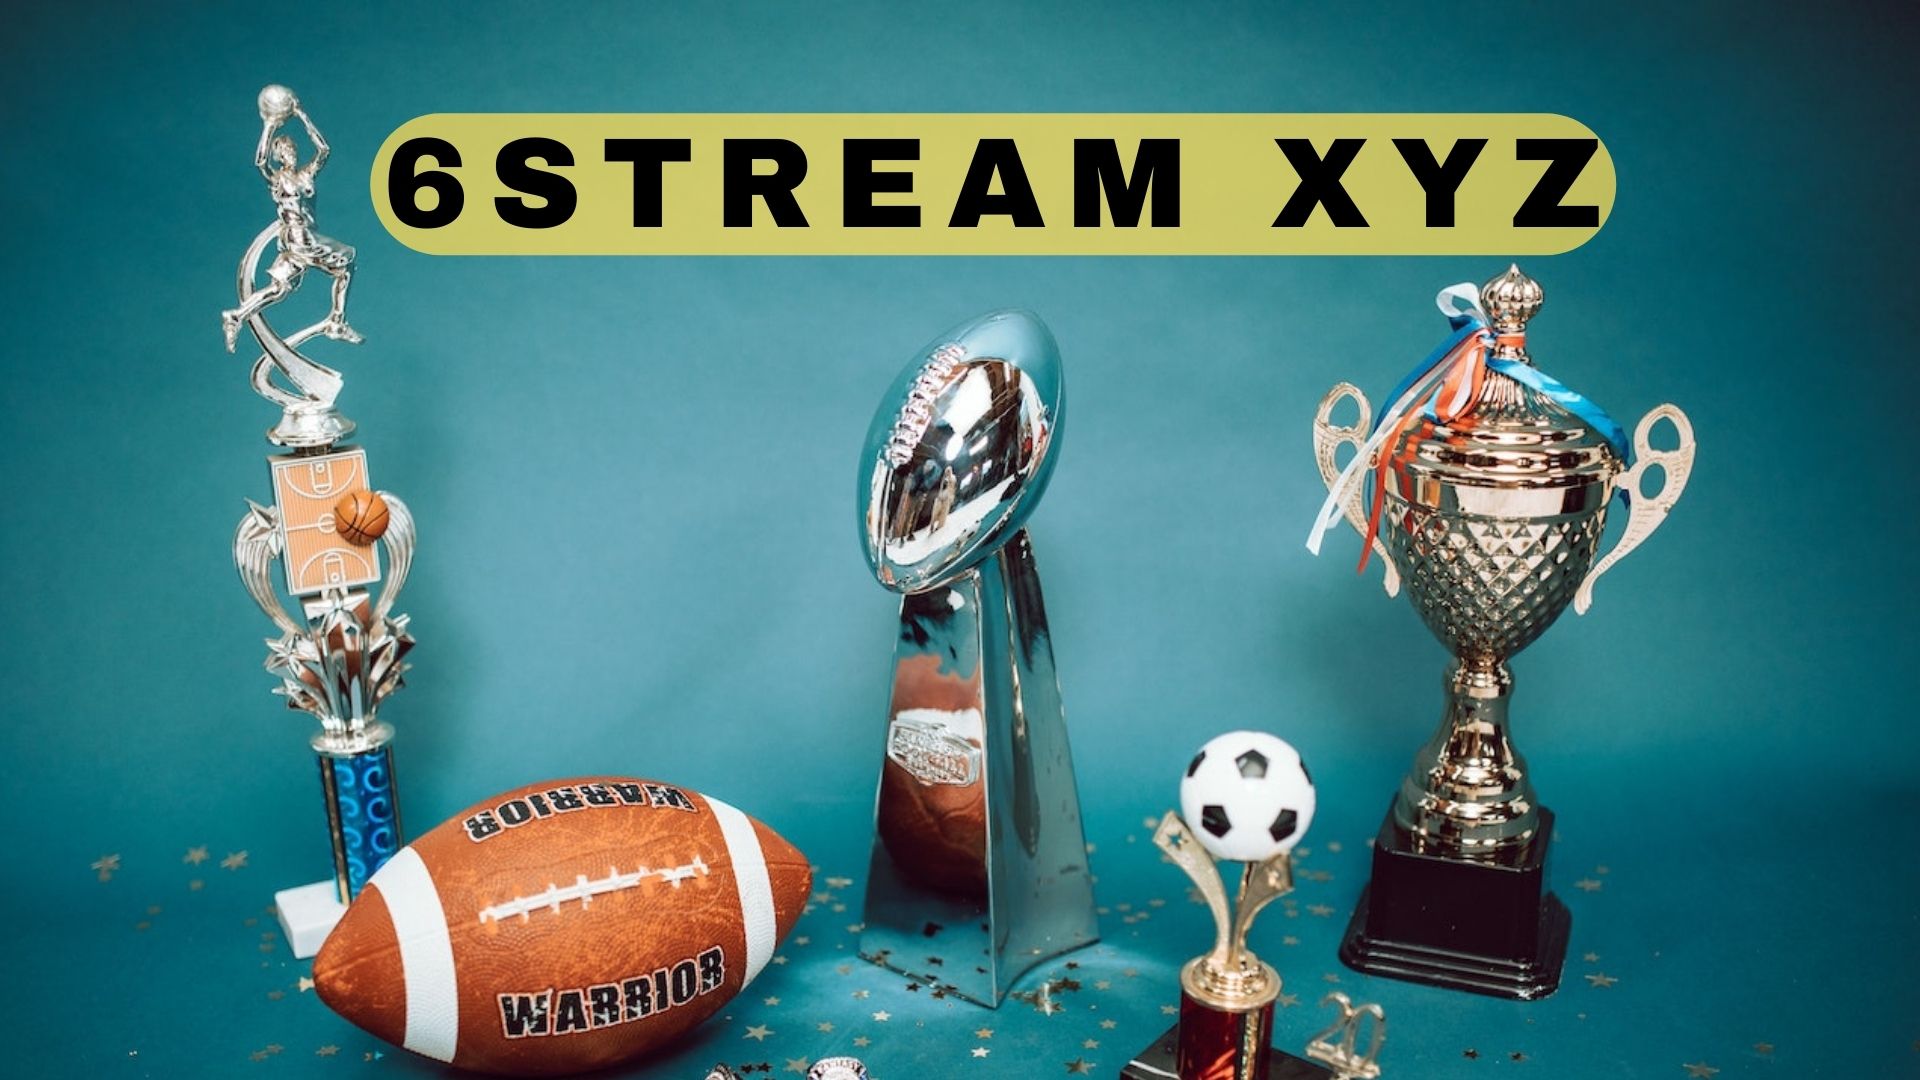 6stream Xyz - Most Popular NBA Stream